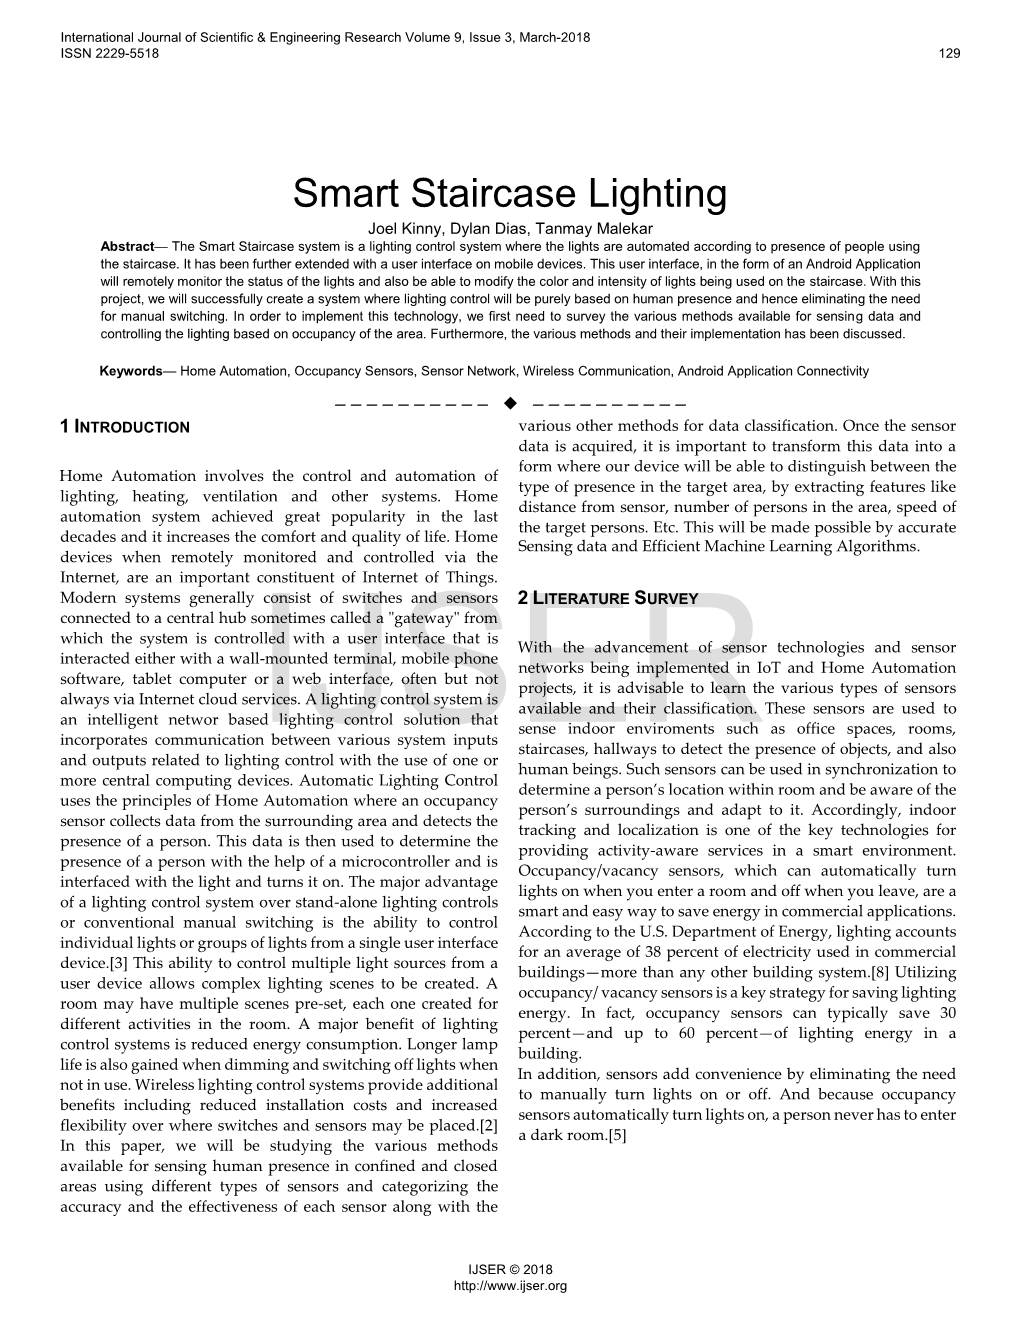 Smart Staircase Lighting